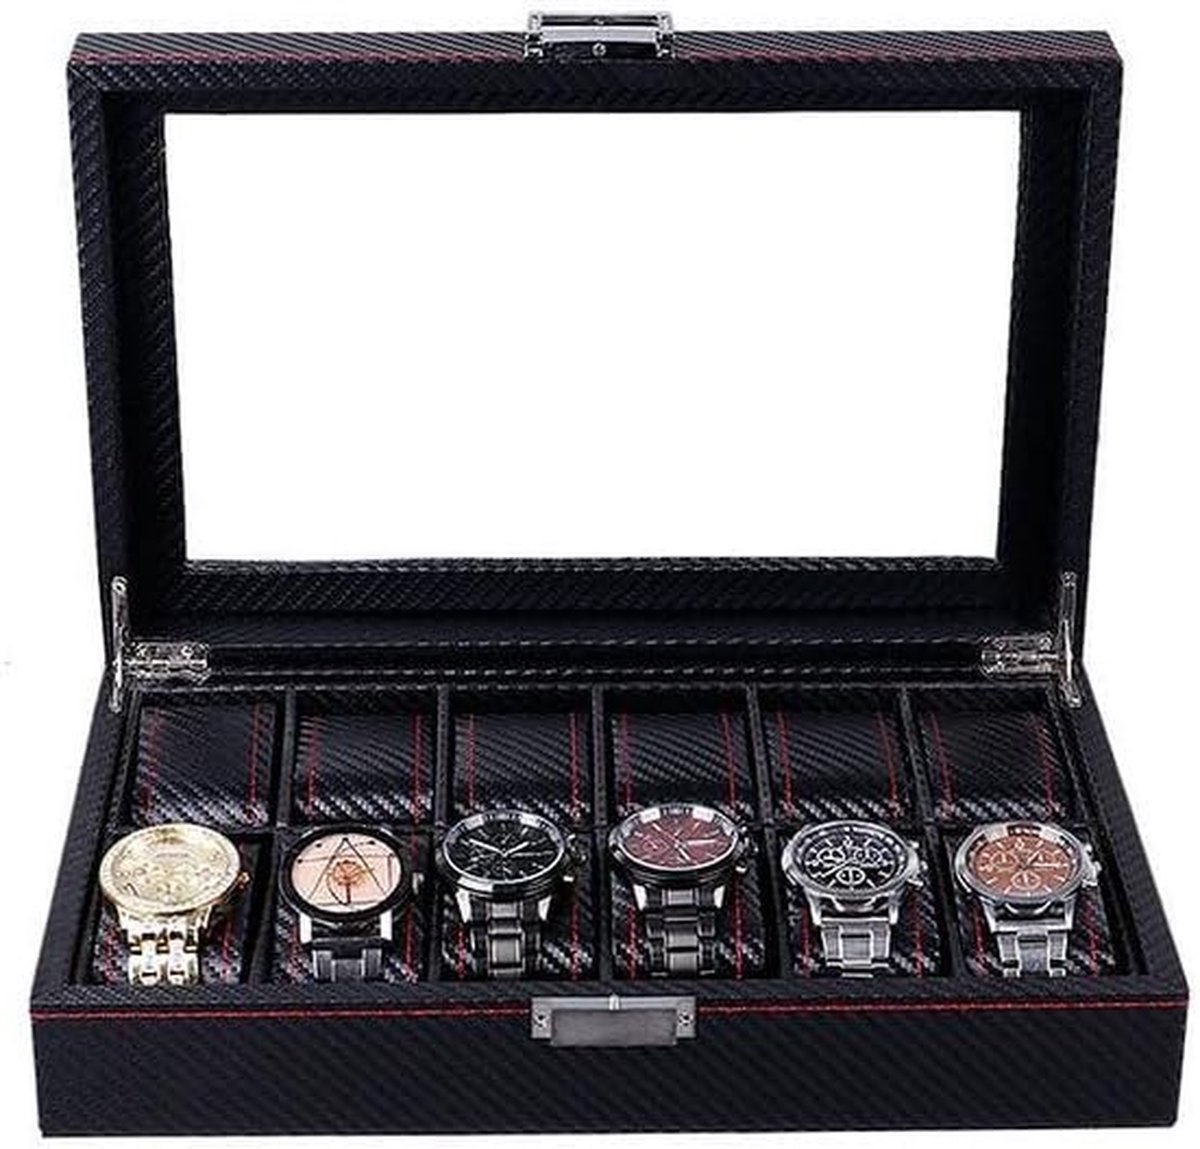 horlogebox - horlogekussen, horlogekast \ horloge doos 21.8D x 27.9W x 8H centimetres